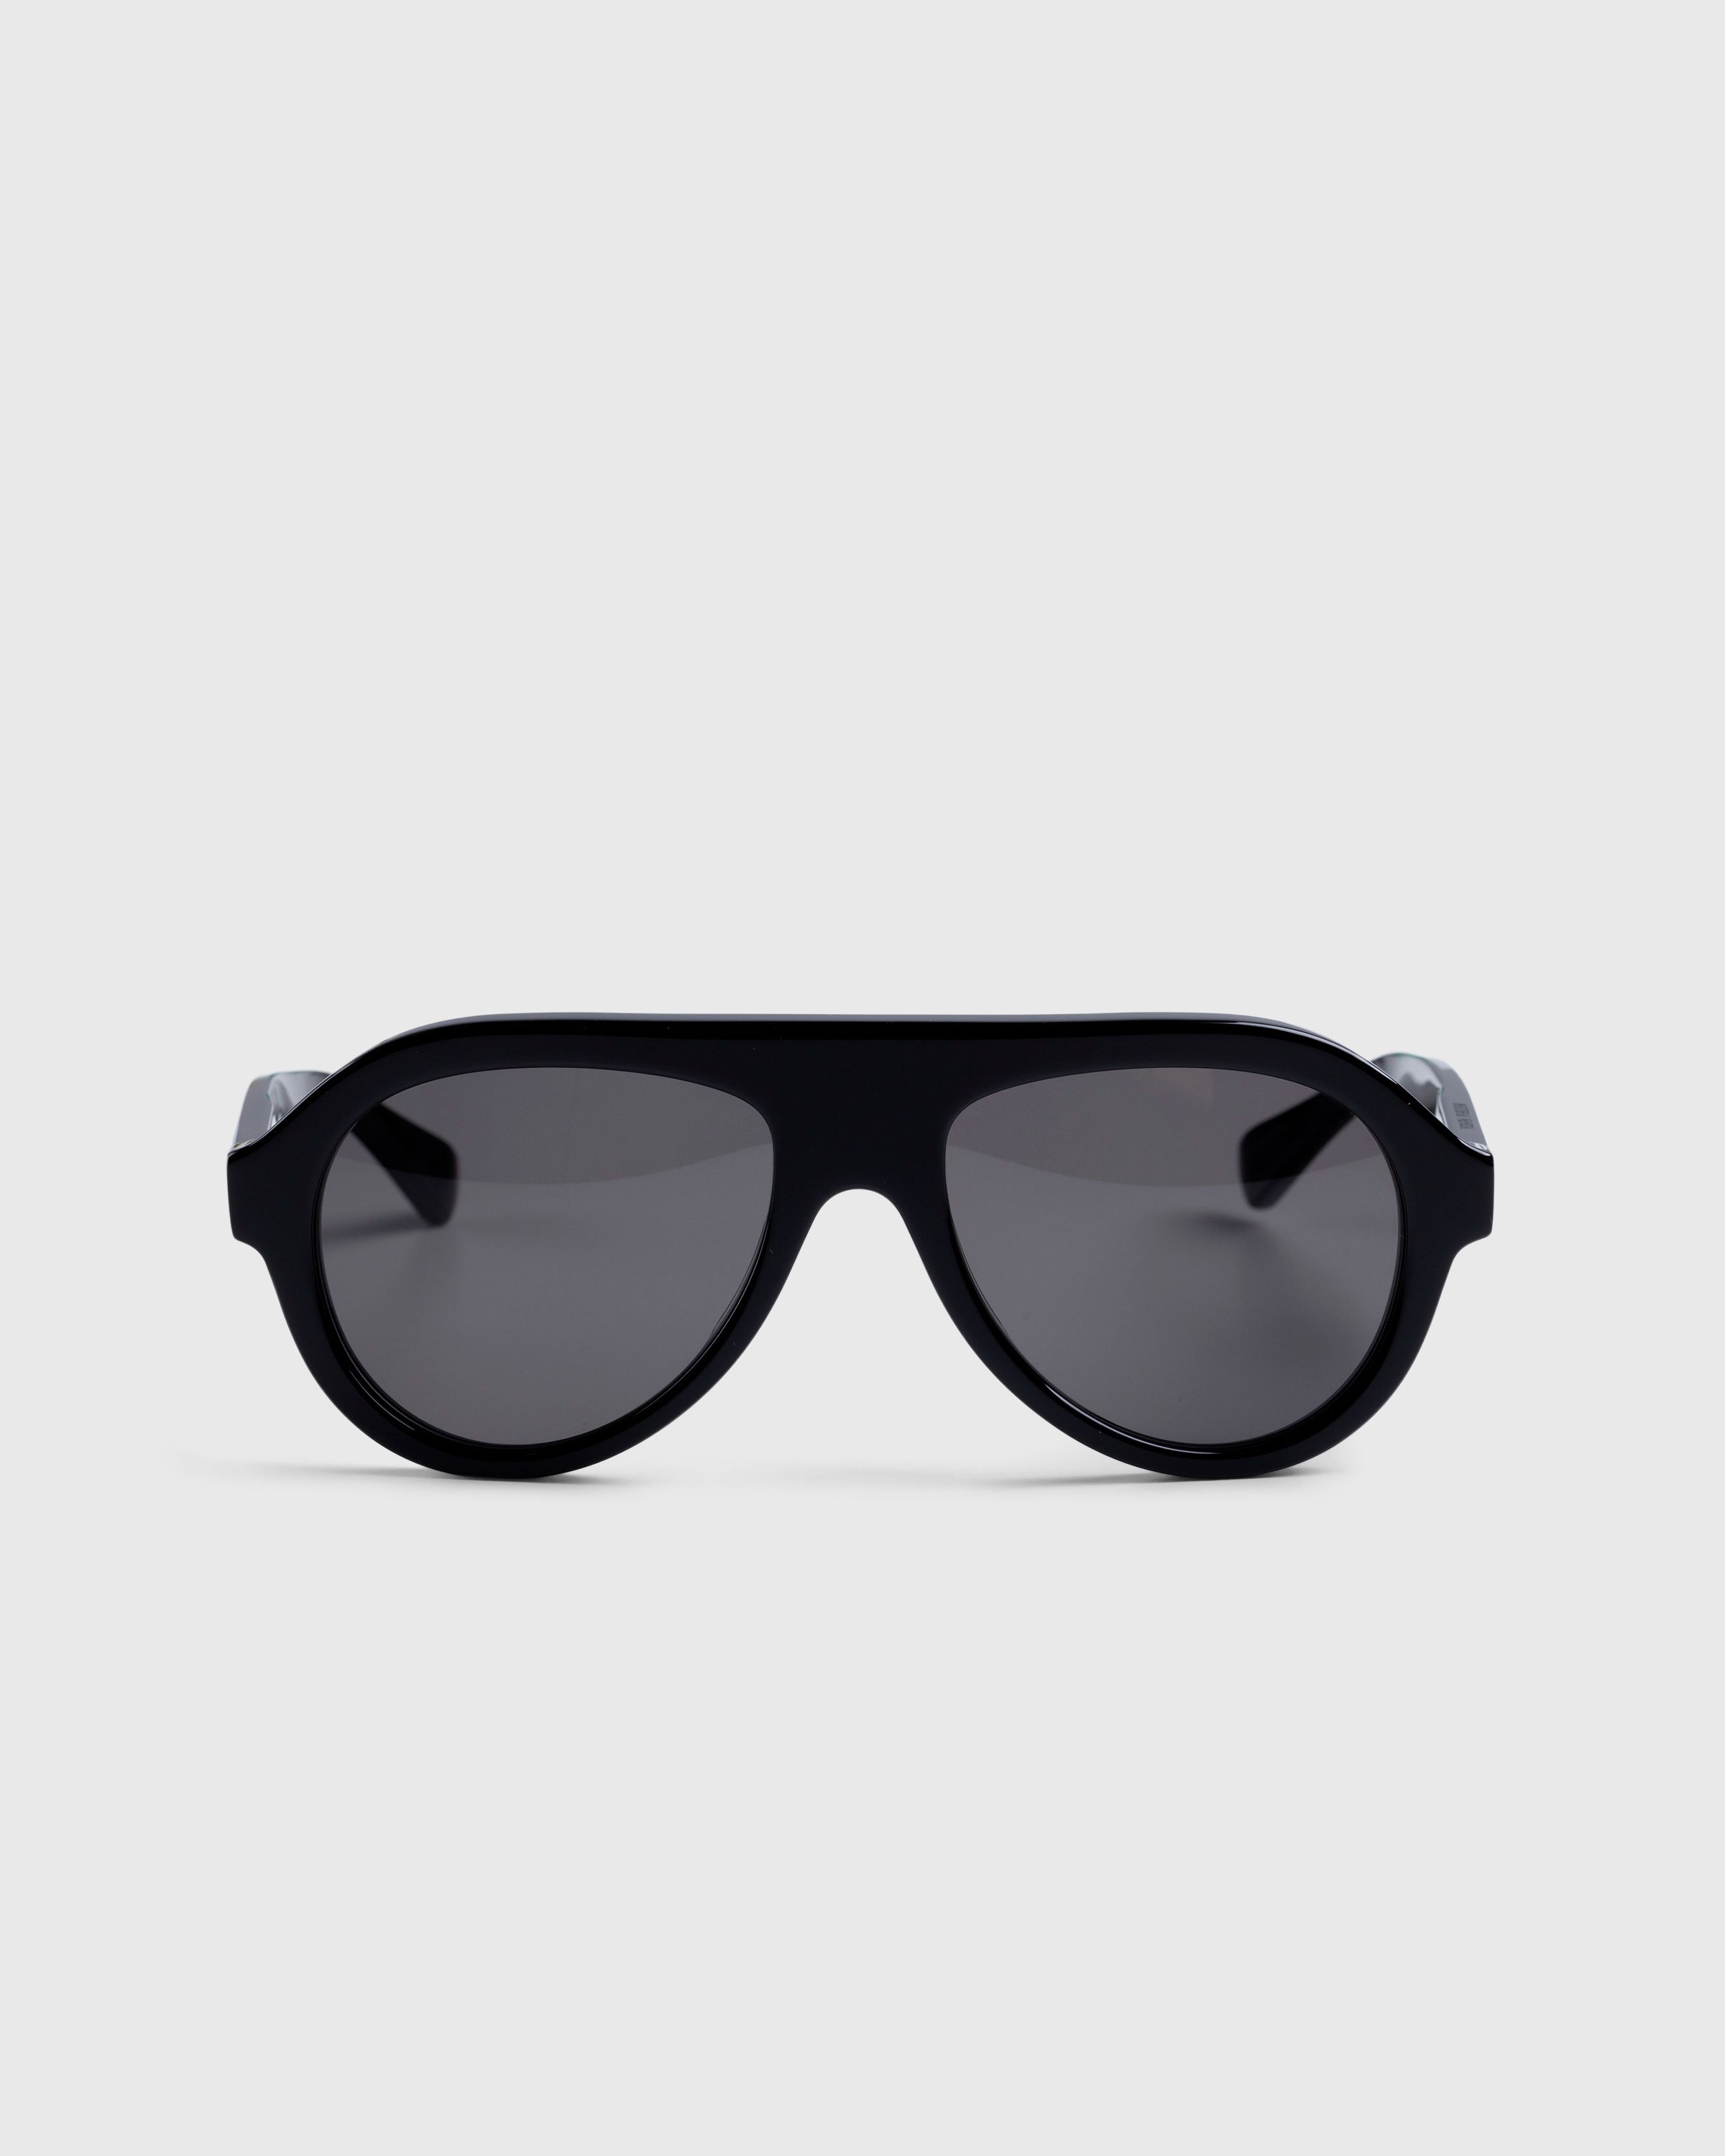 Bottega Veneta - Classic Aviator Sunglasses Black/Grey - Accessories - Black - Image 1